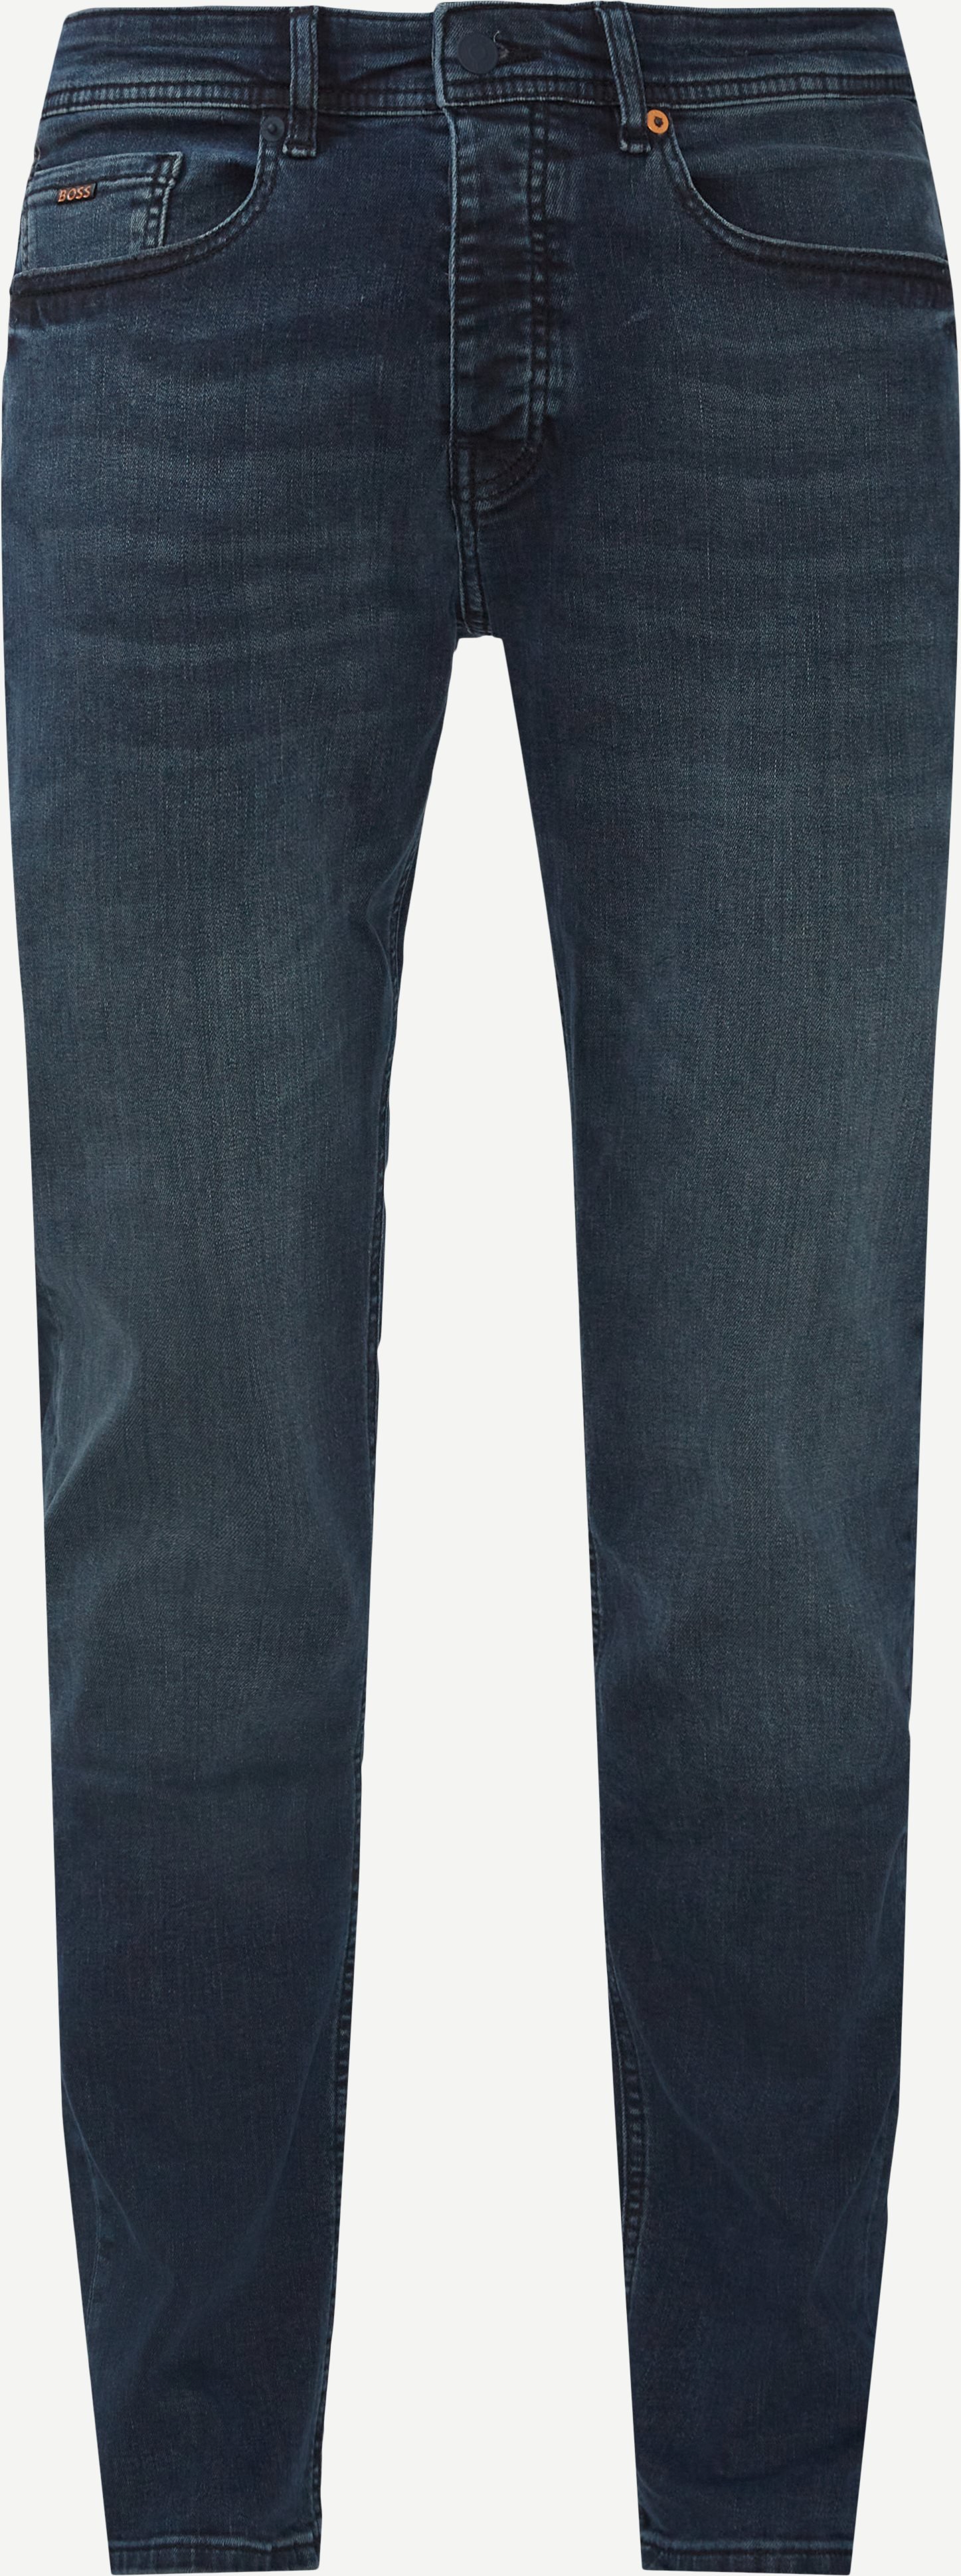 Taber BC Jeans - Bukser - Tapered fit - Denim